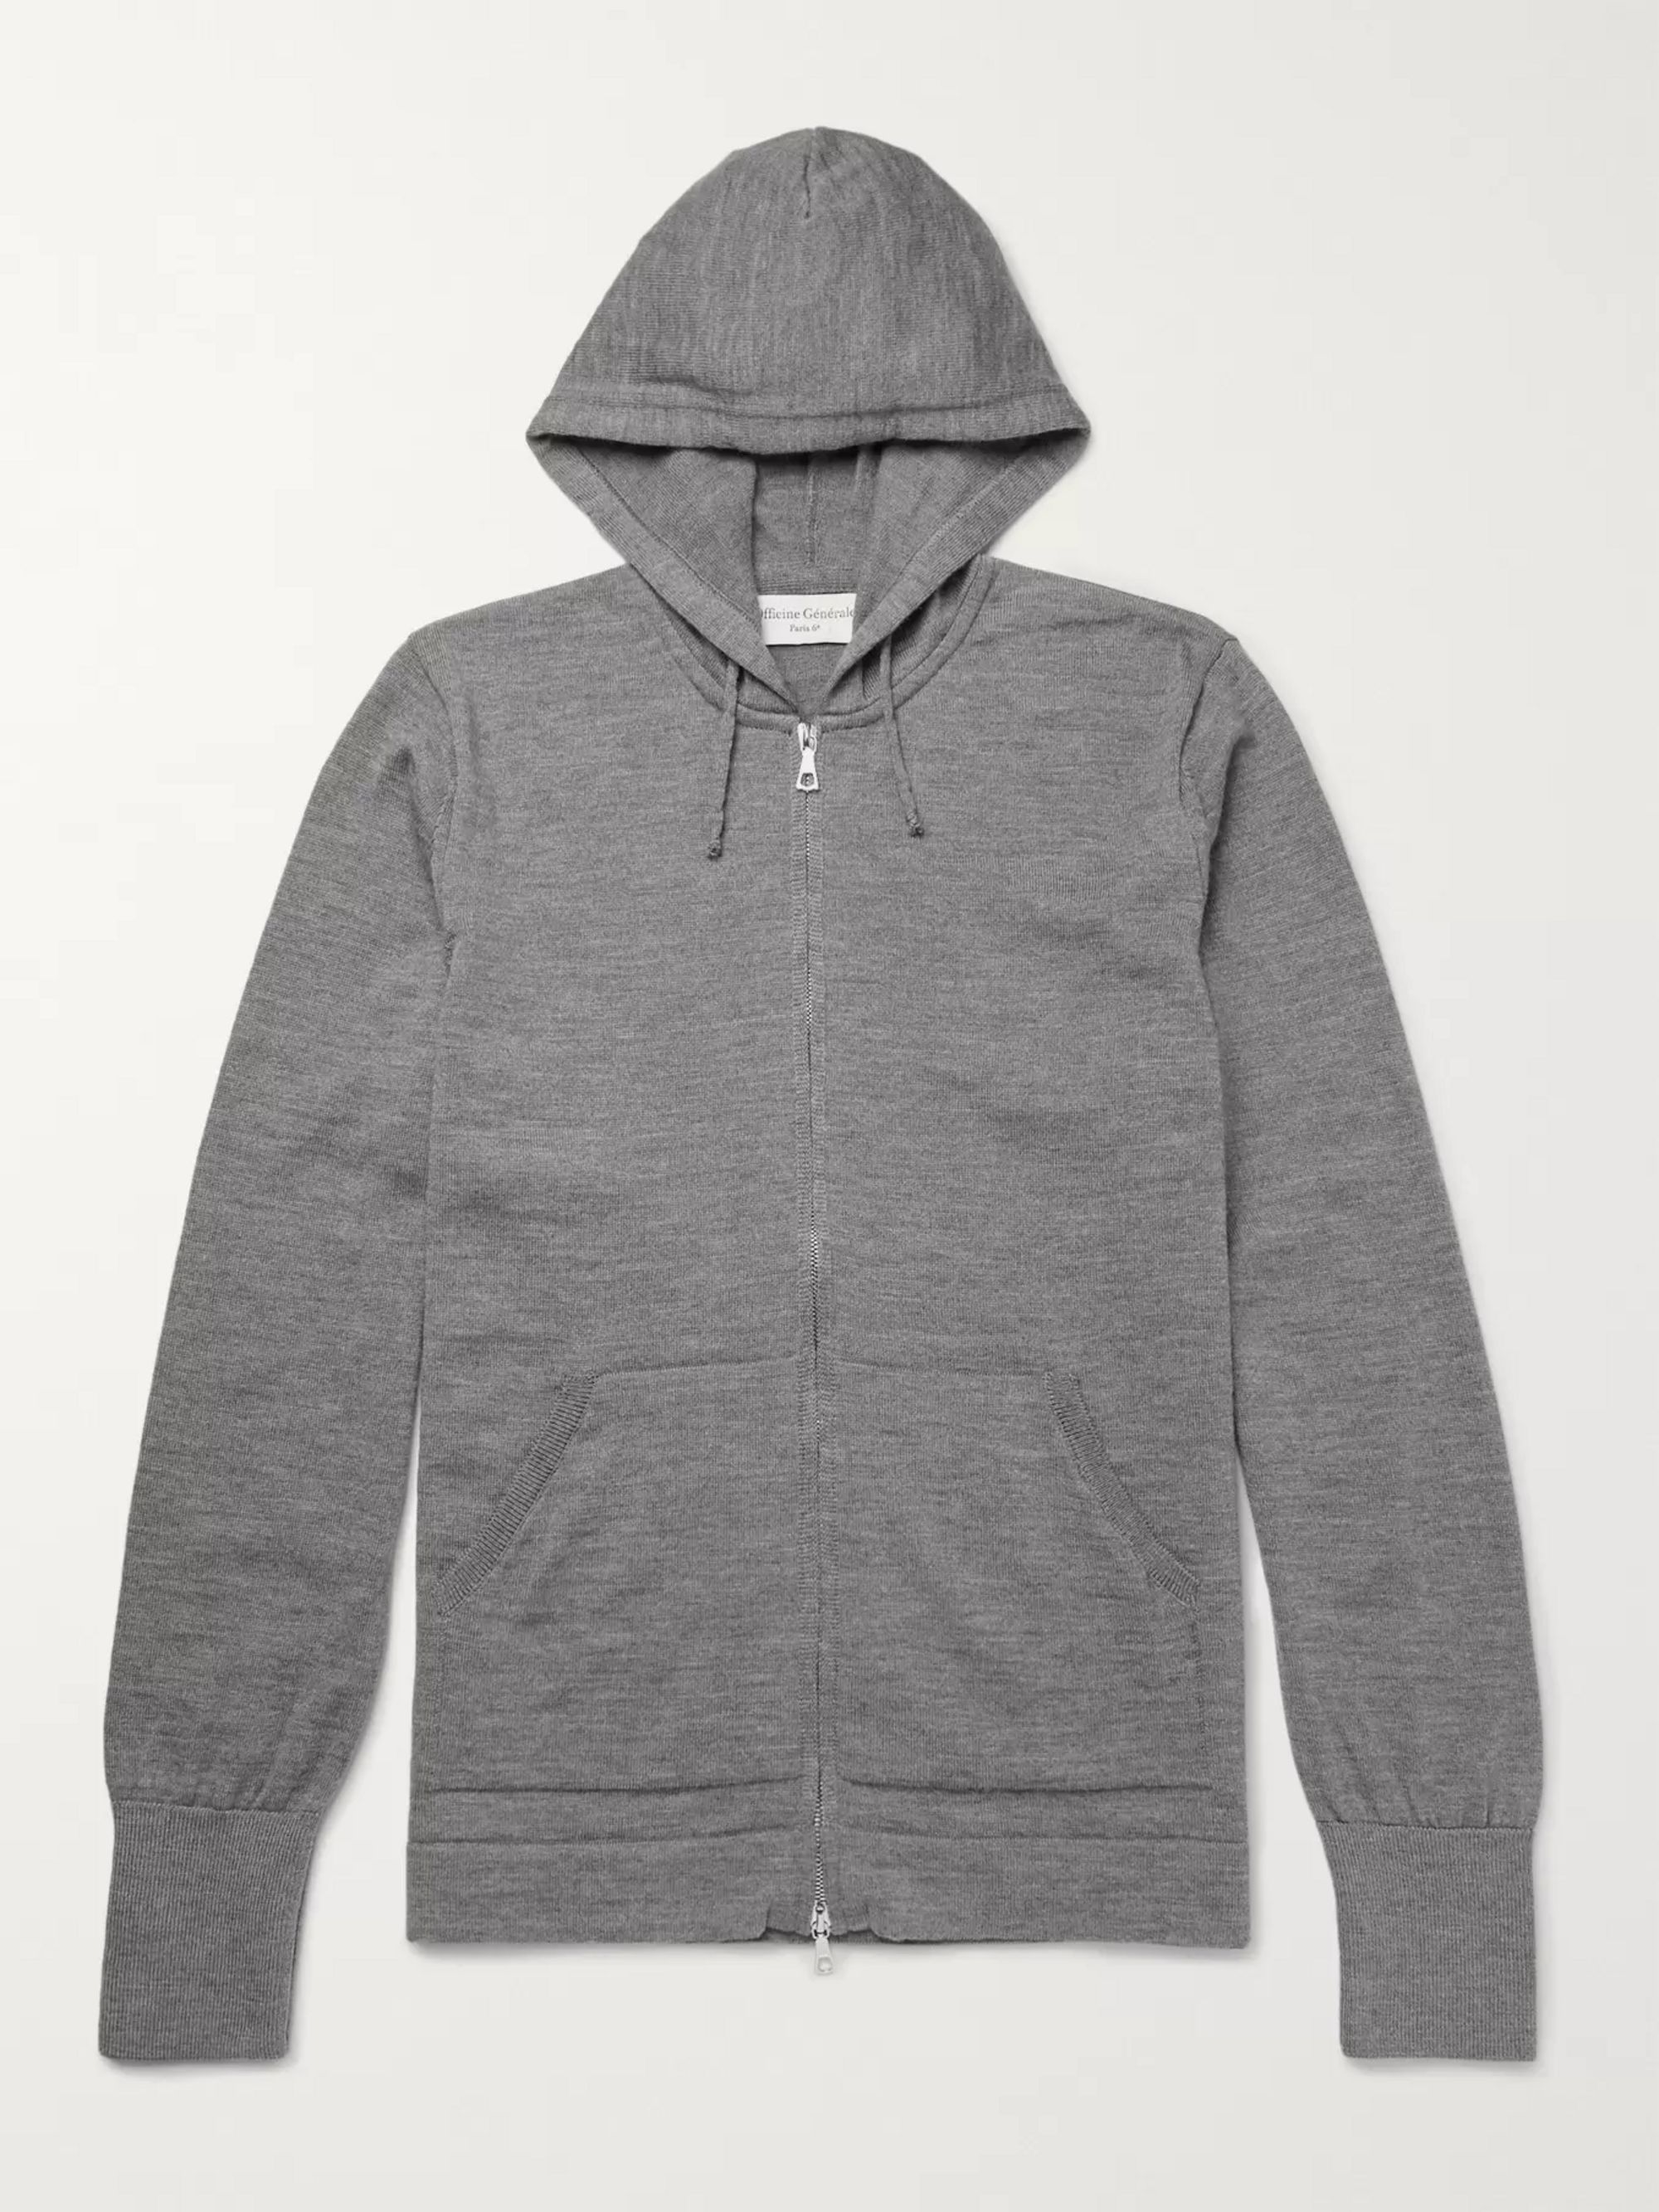 grey zip up hoodie